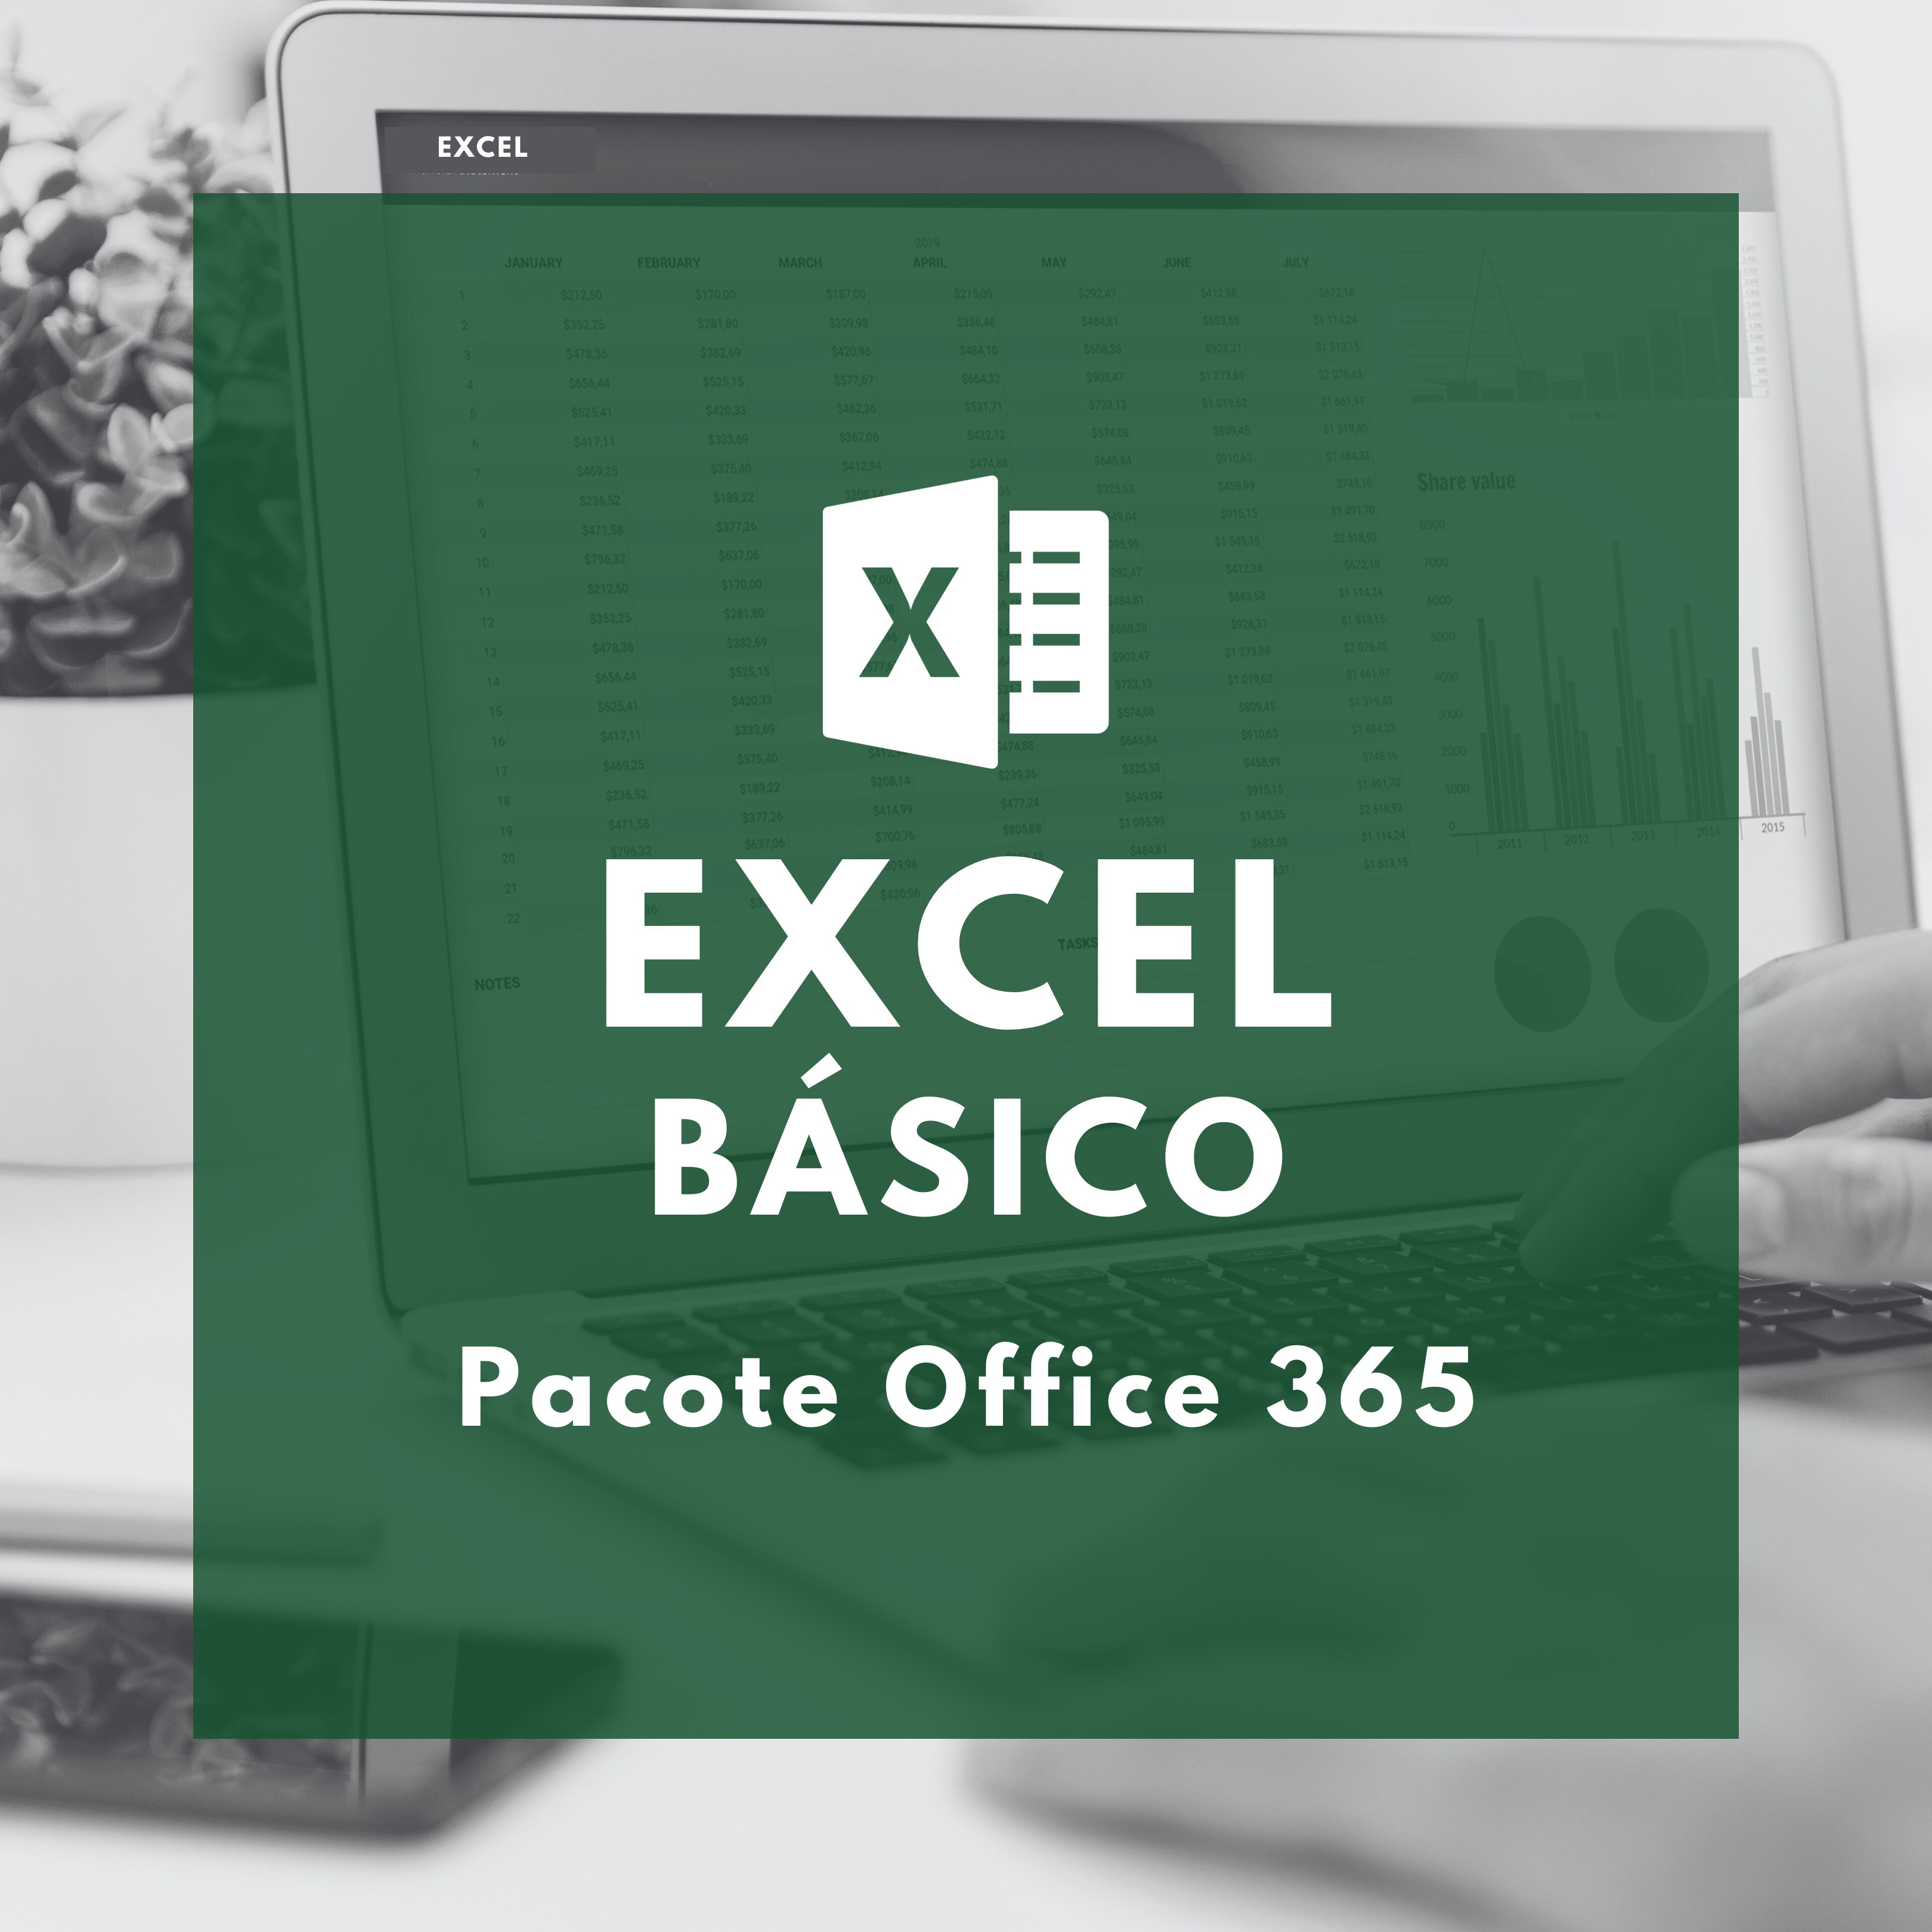 Pacote Office 365 - Excel Básico